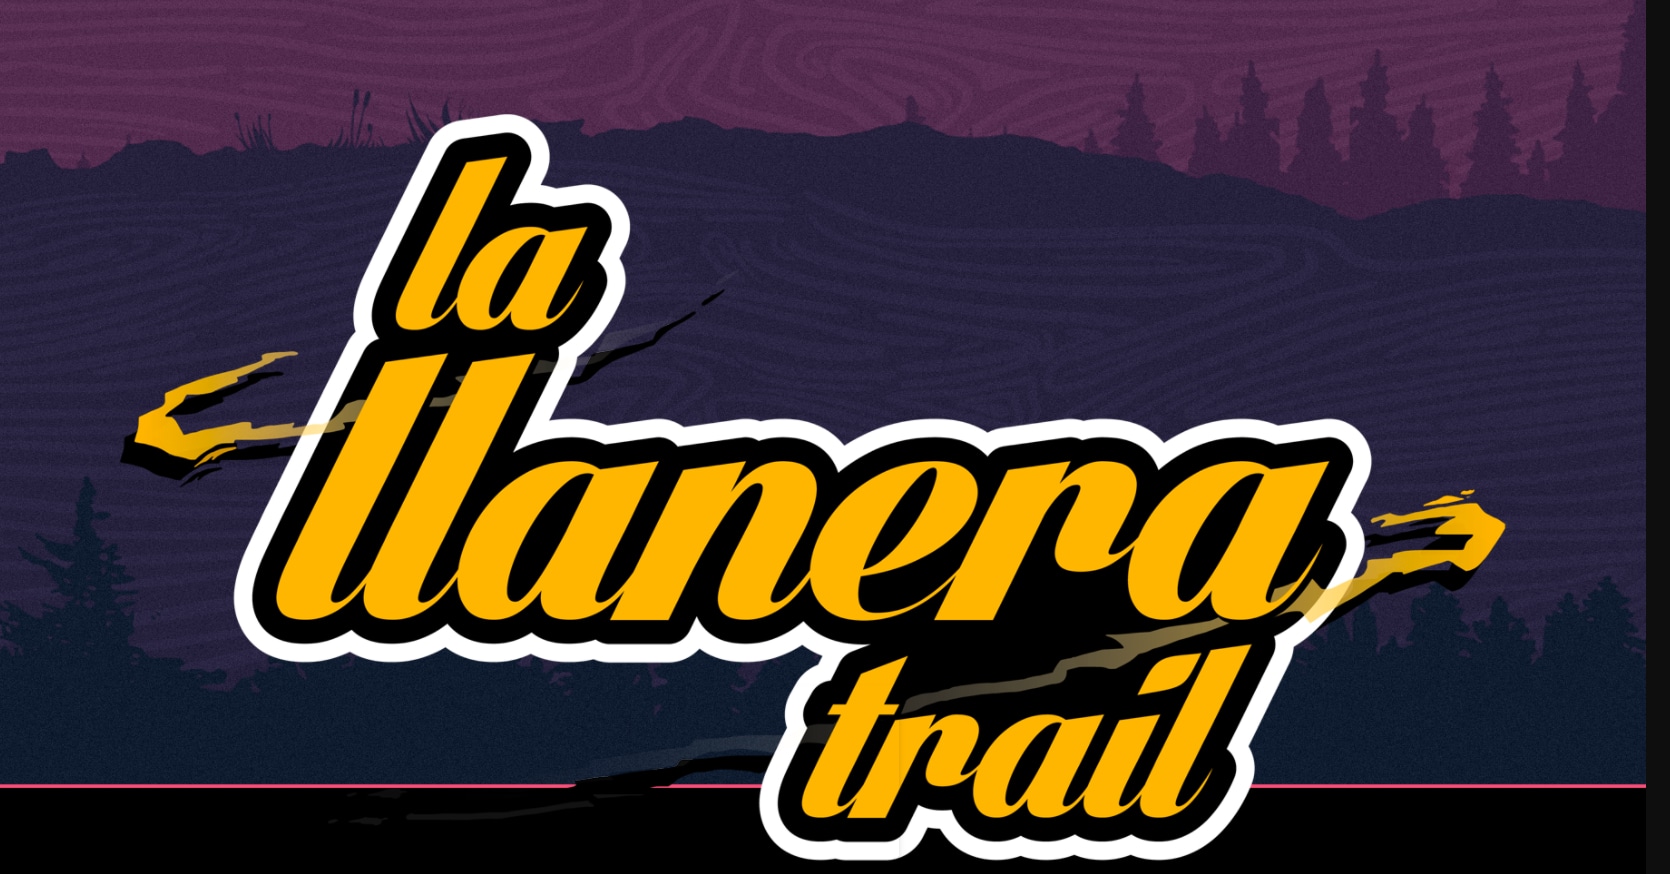 a Llarena Trail runner dies